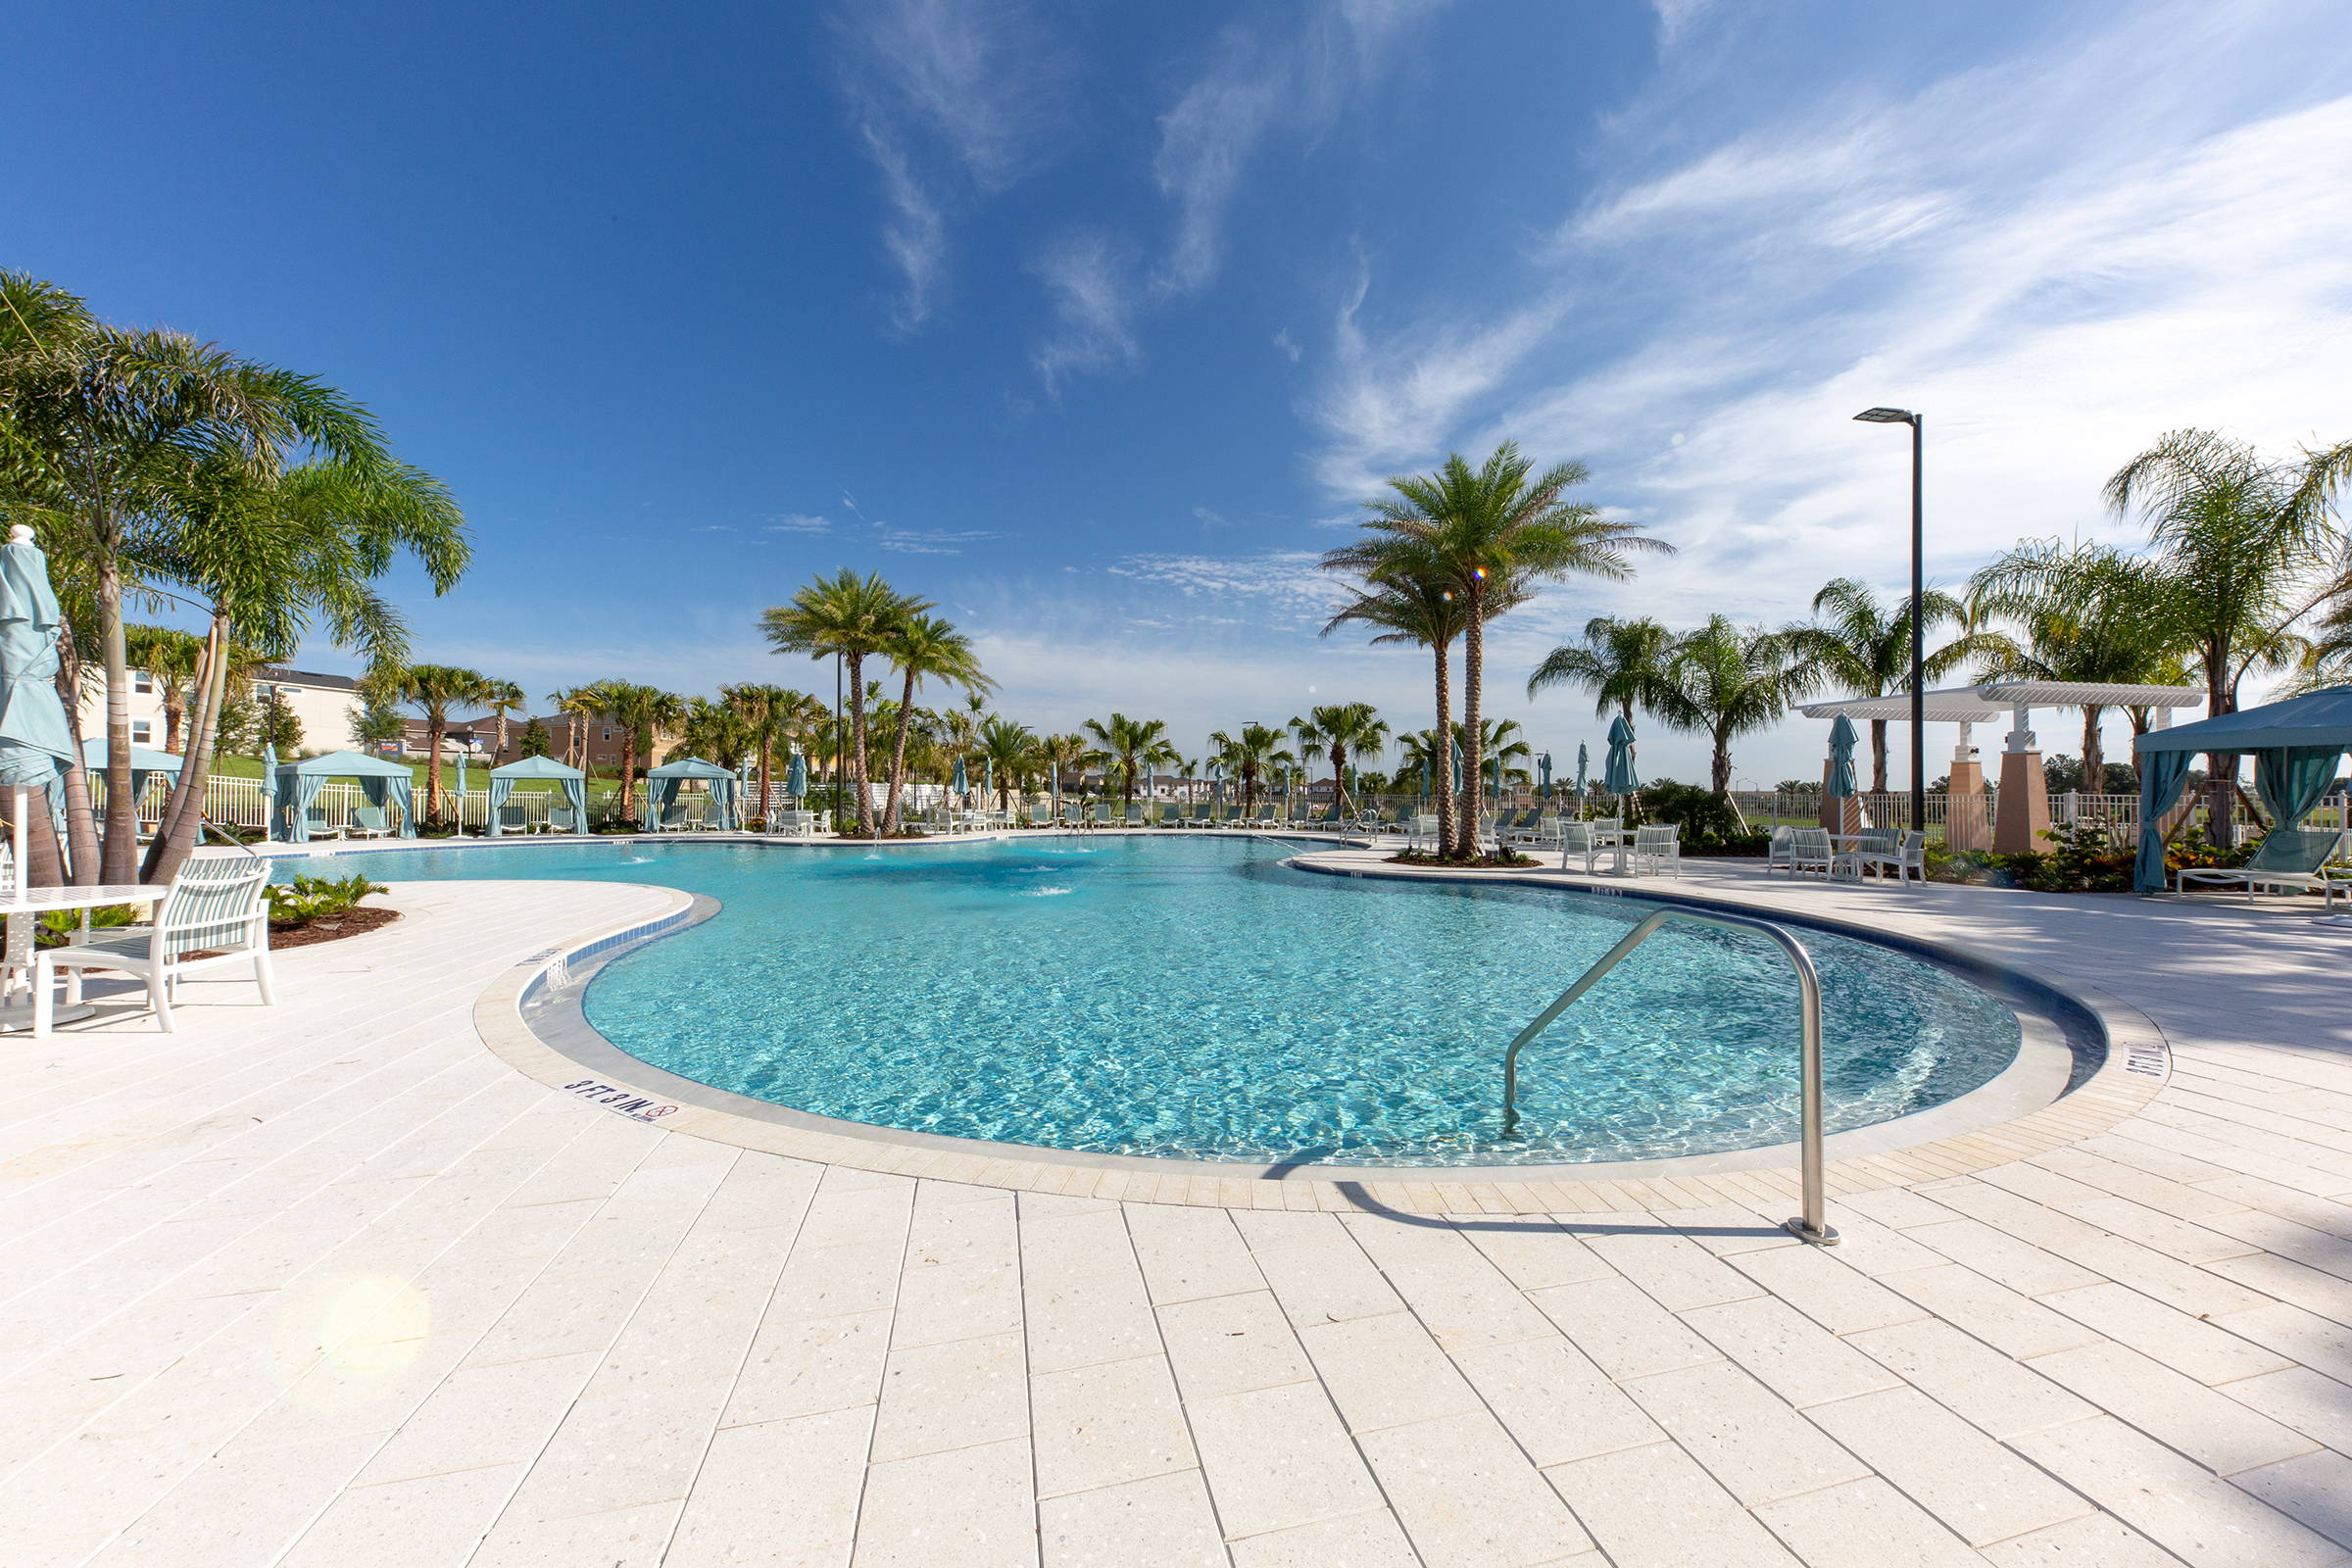 Solara Resort: Your Dream Orlando Getaway